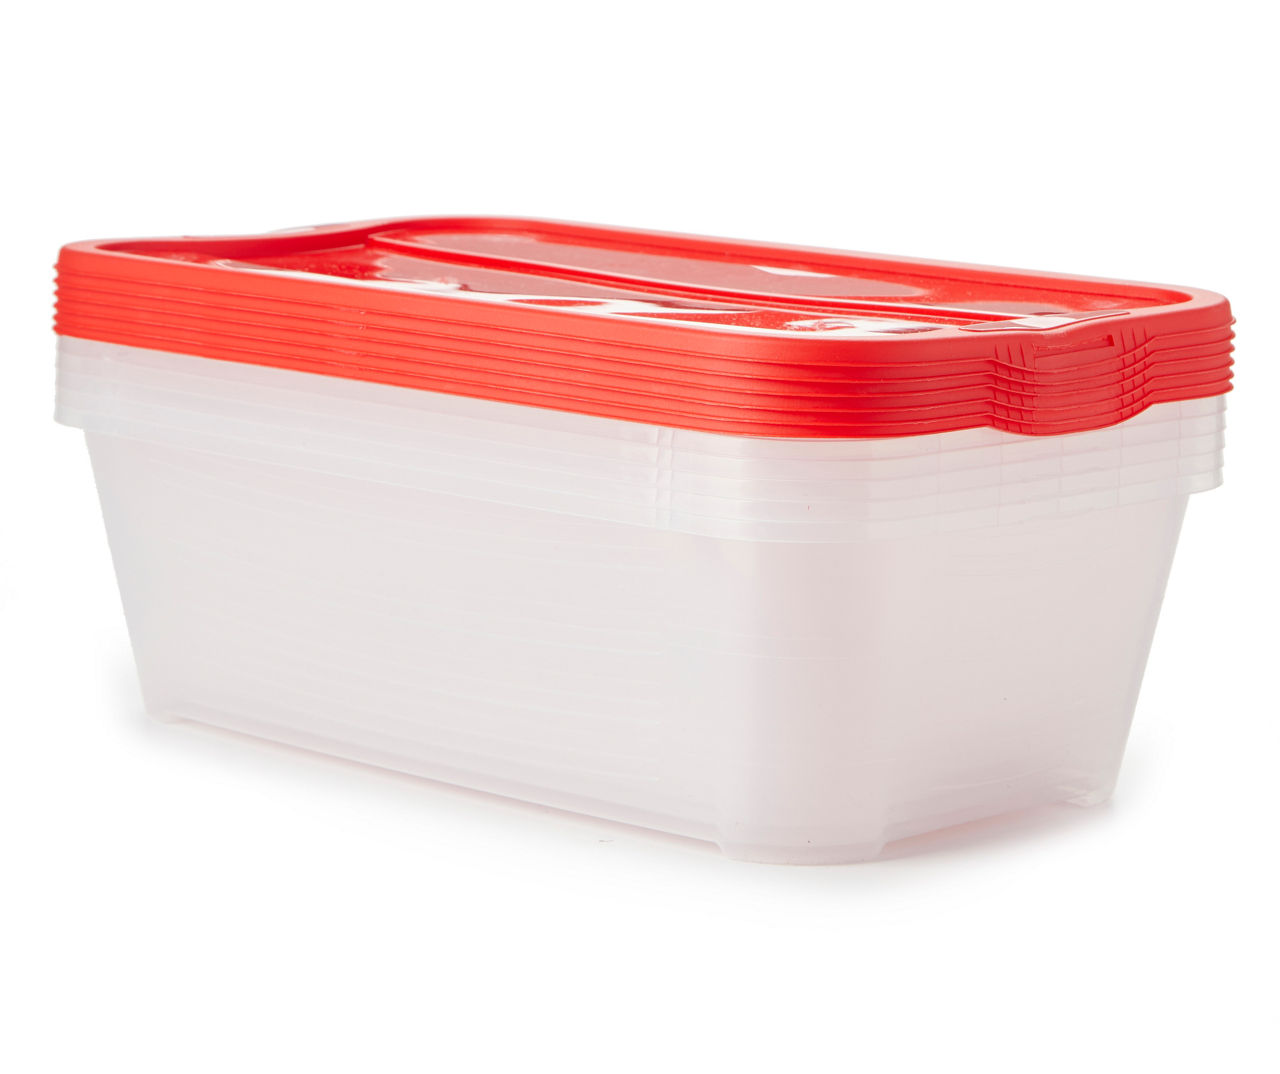 Red Large Plastic Storage Bin